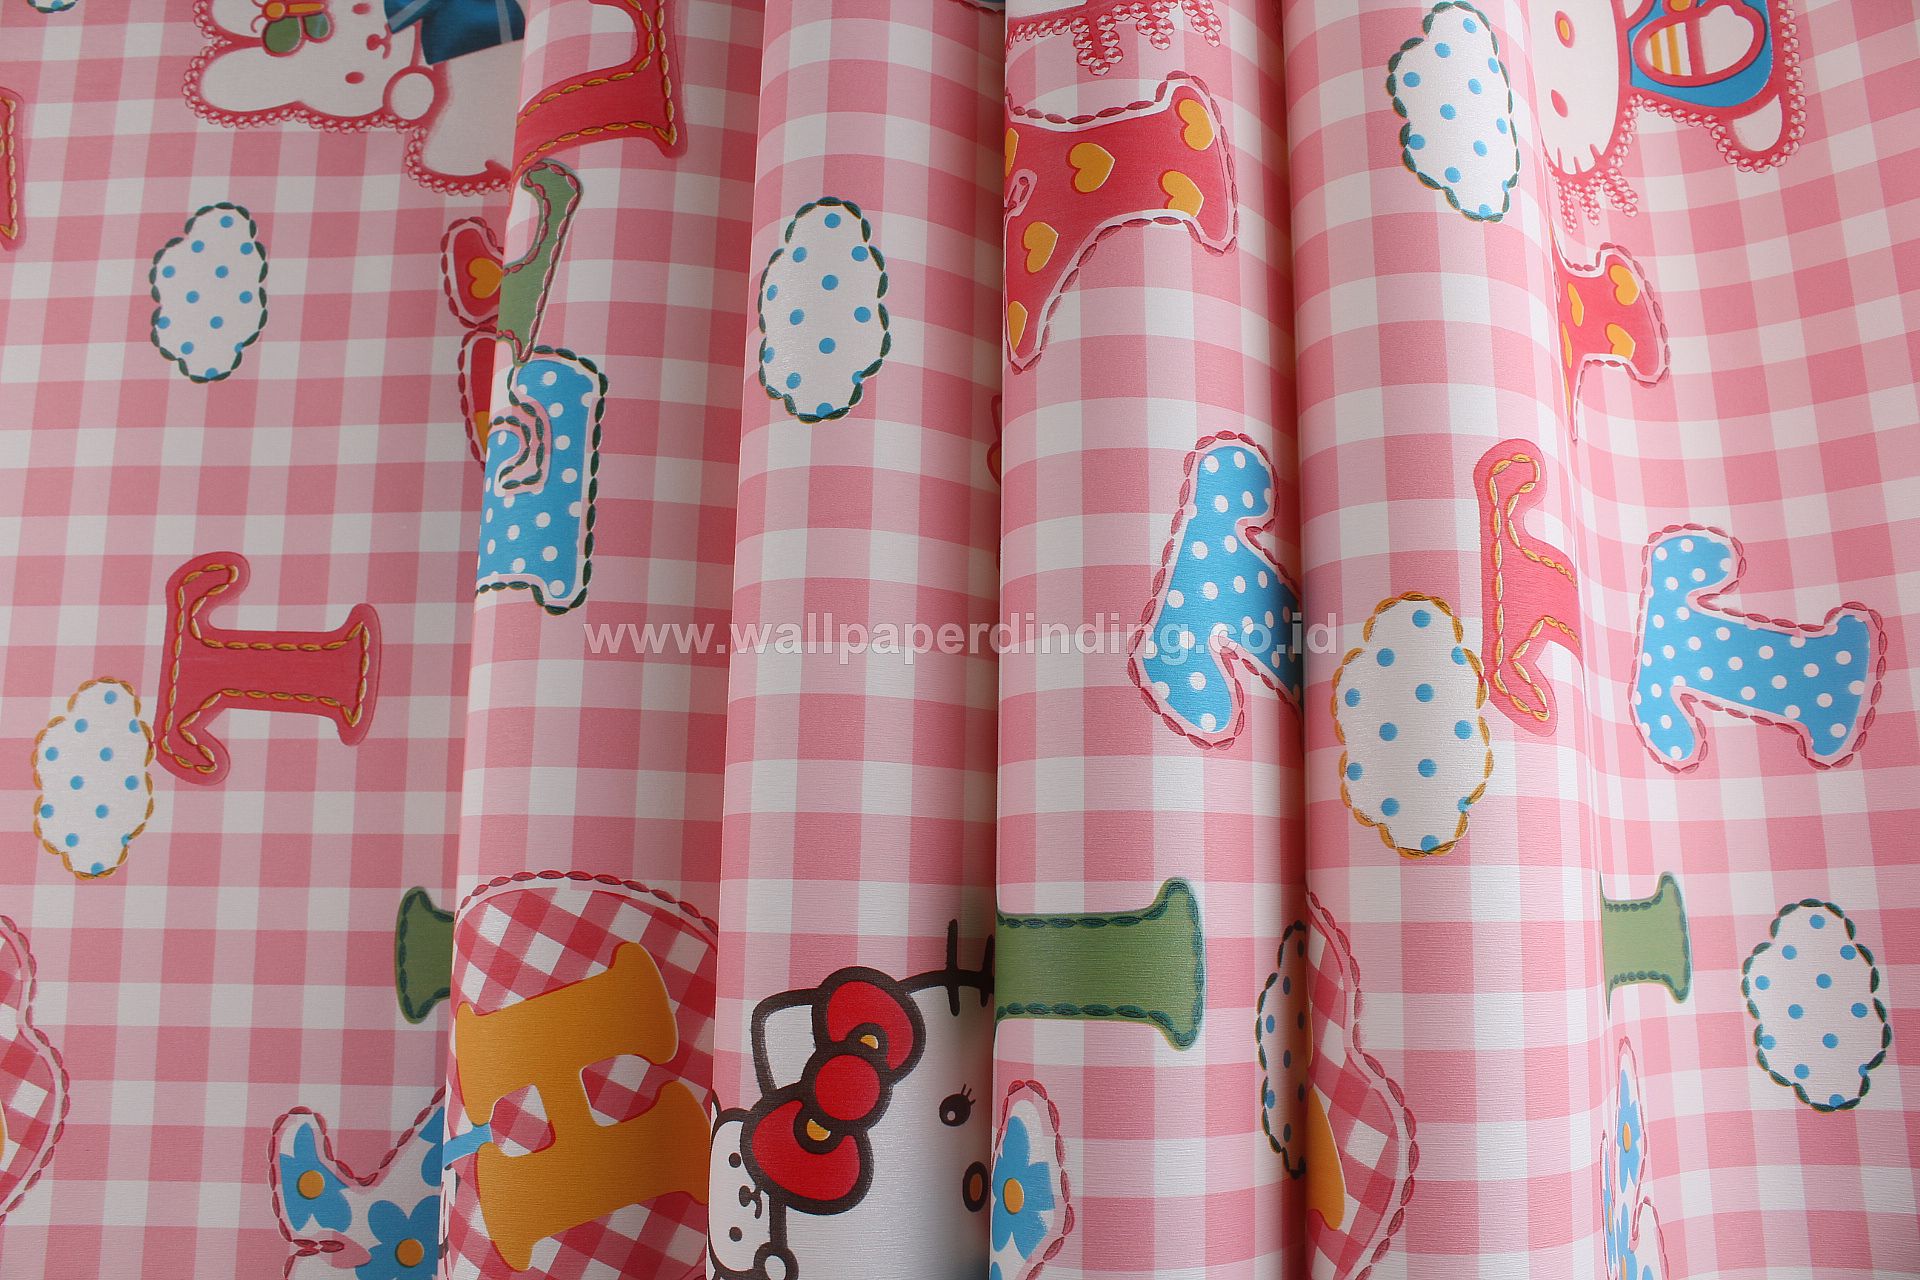  Wallpaper  Dinding  Anak Hello  Kitty  Pink Yr 4417 